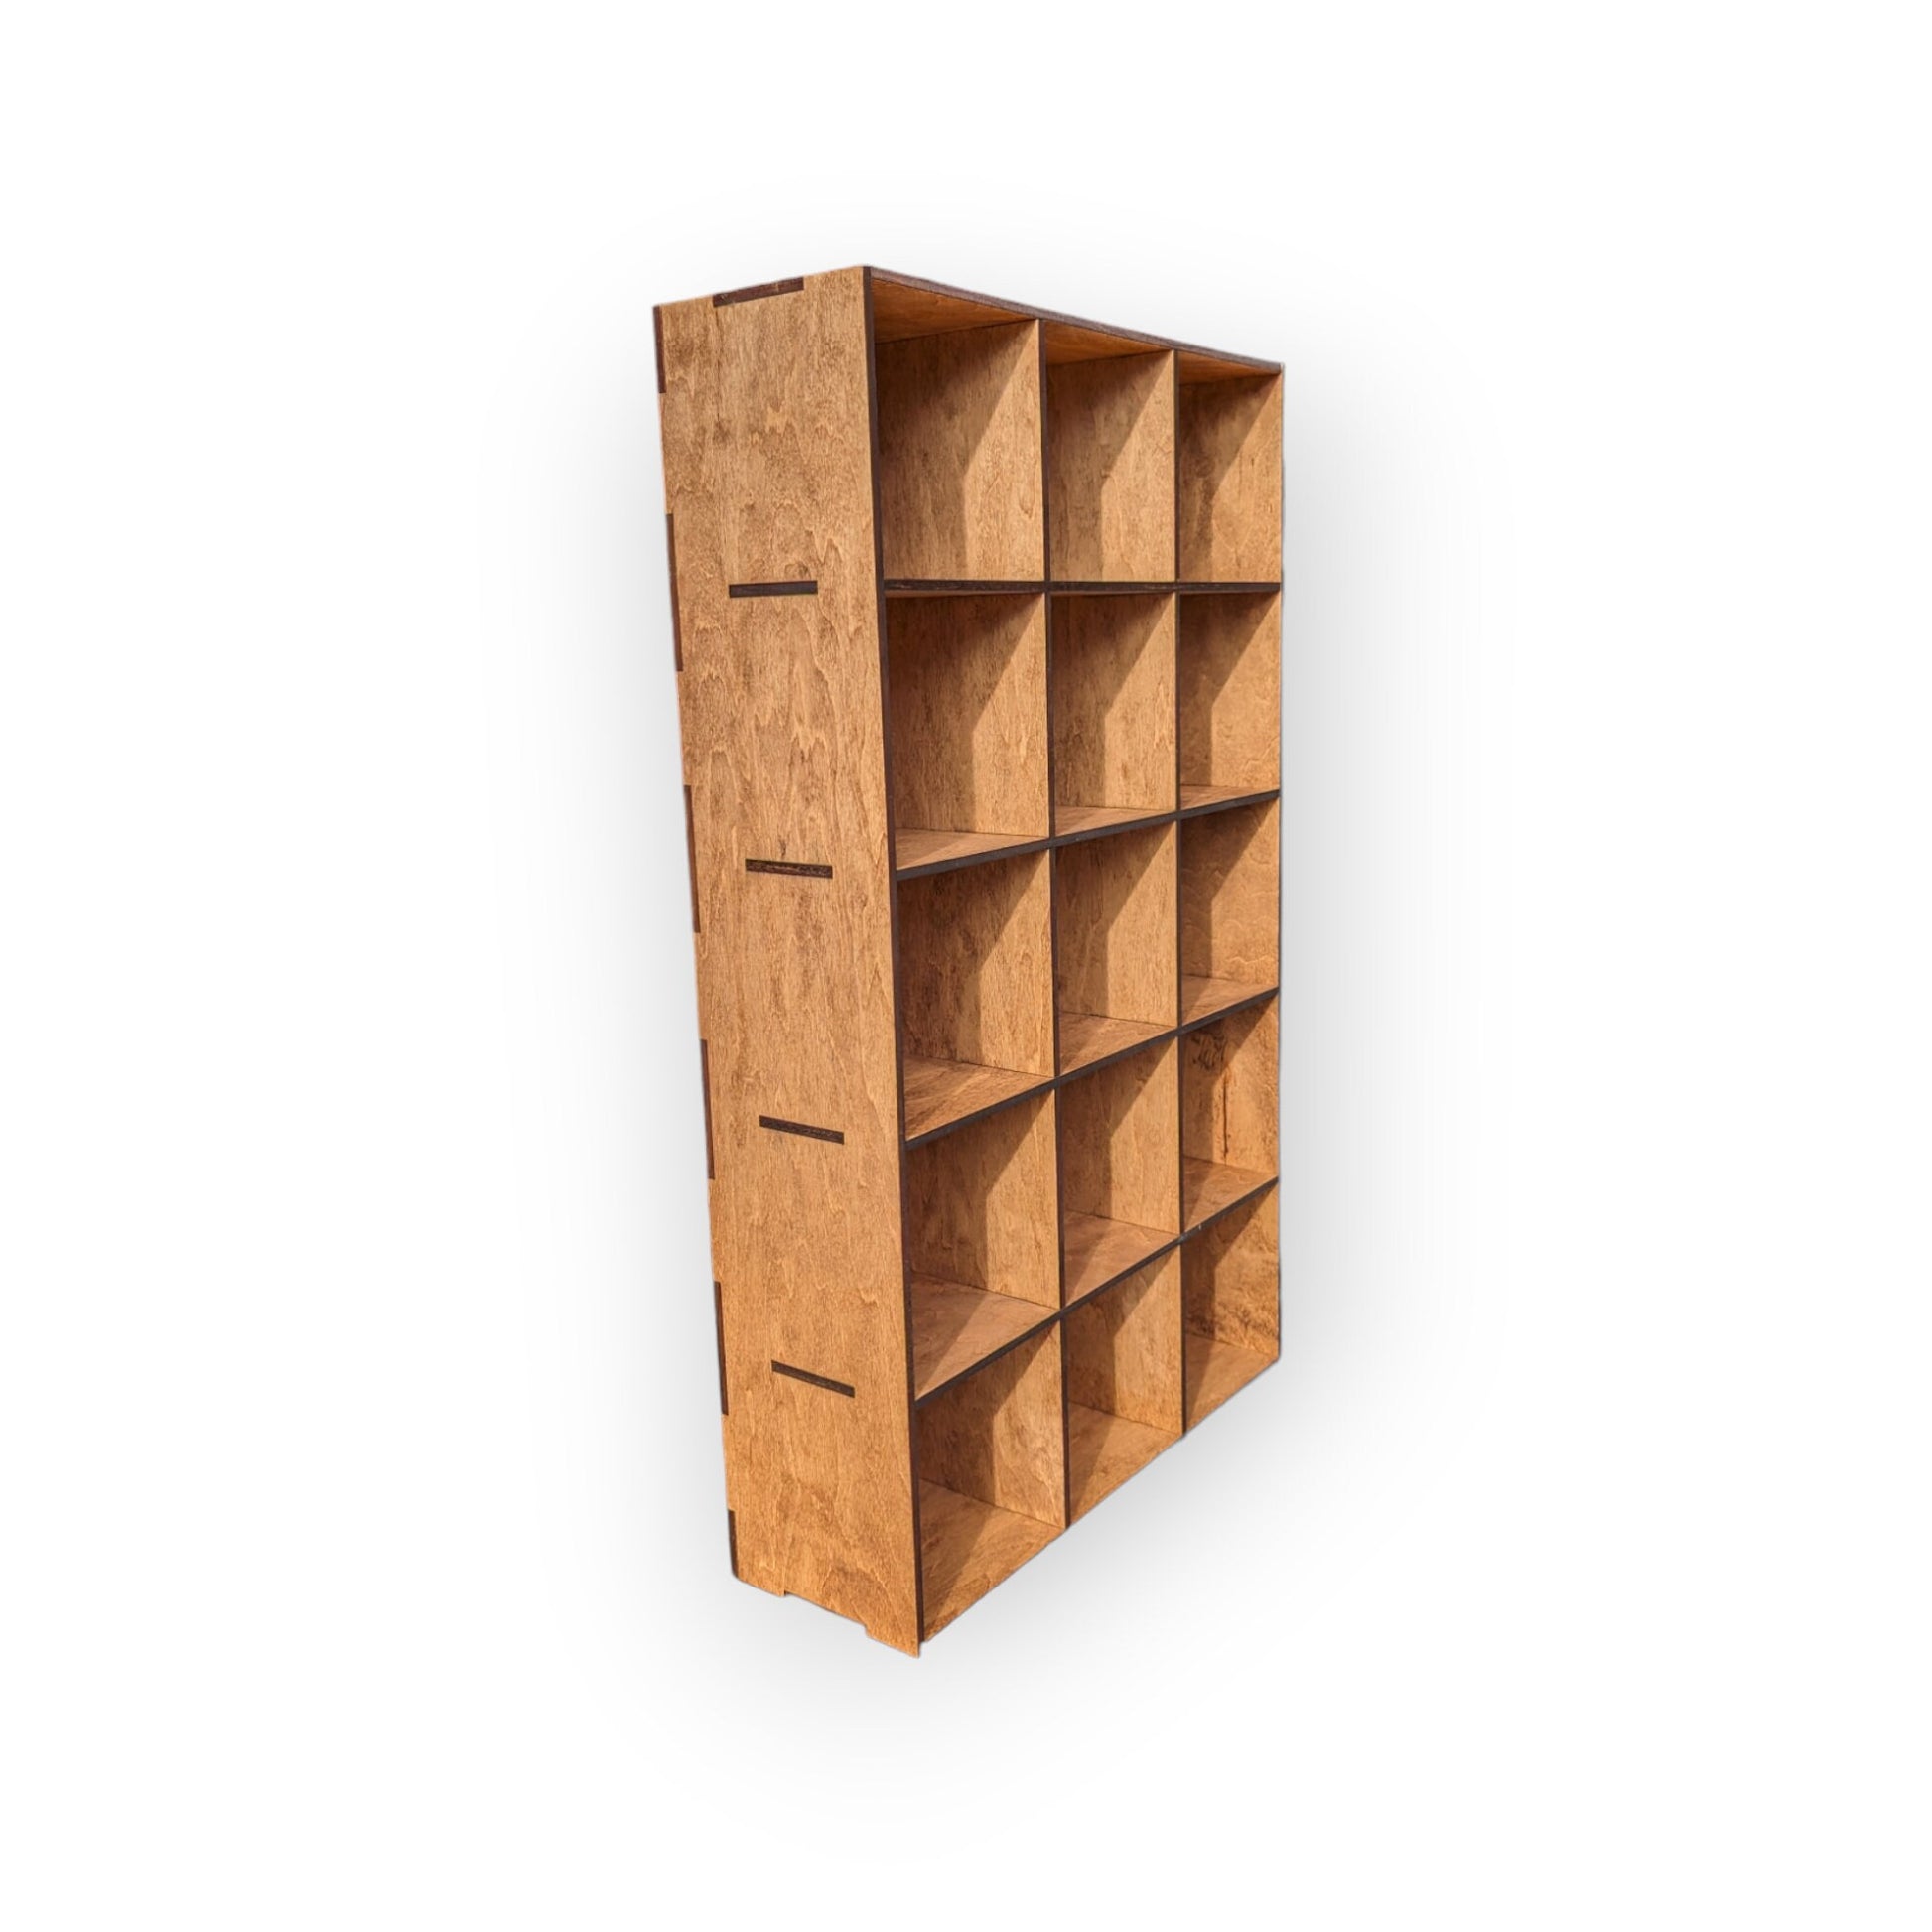 15 Compartment Wooden Display Shelf - Coffee Mug Cup Shelf - Curio Cabinet- Knick Knack Display - Printer Tray -Figure Organizer Display